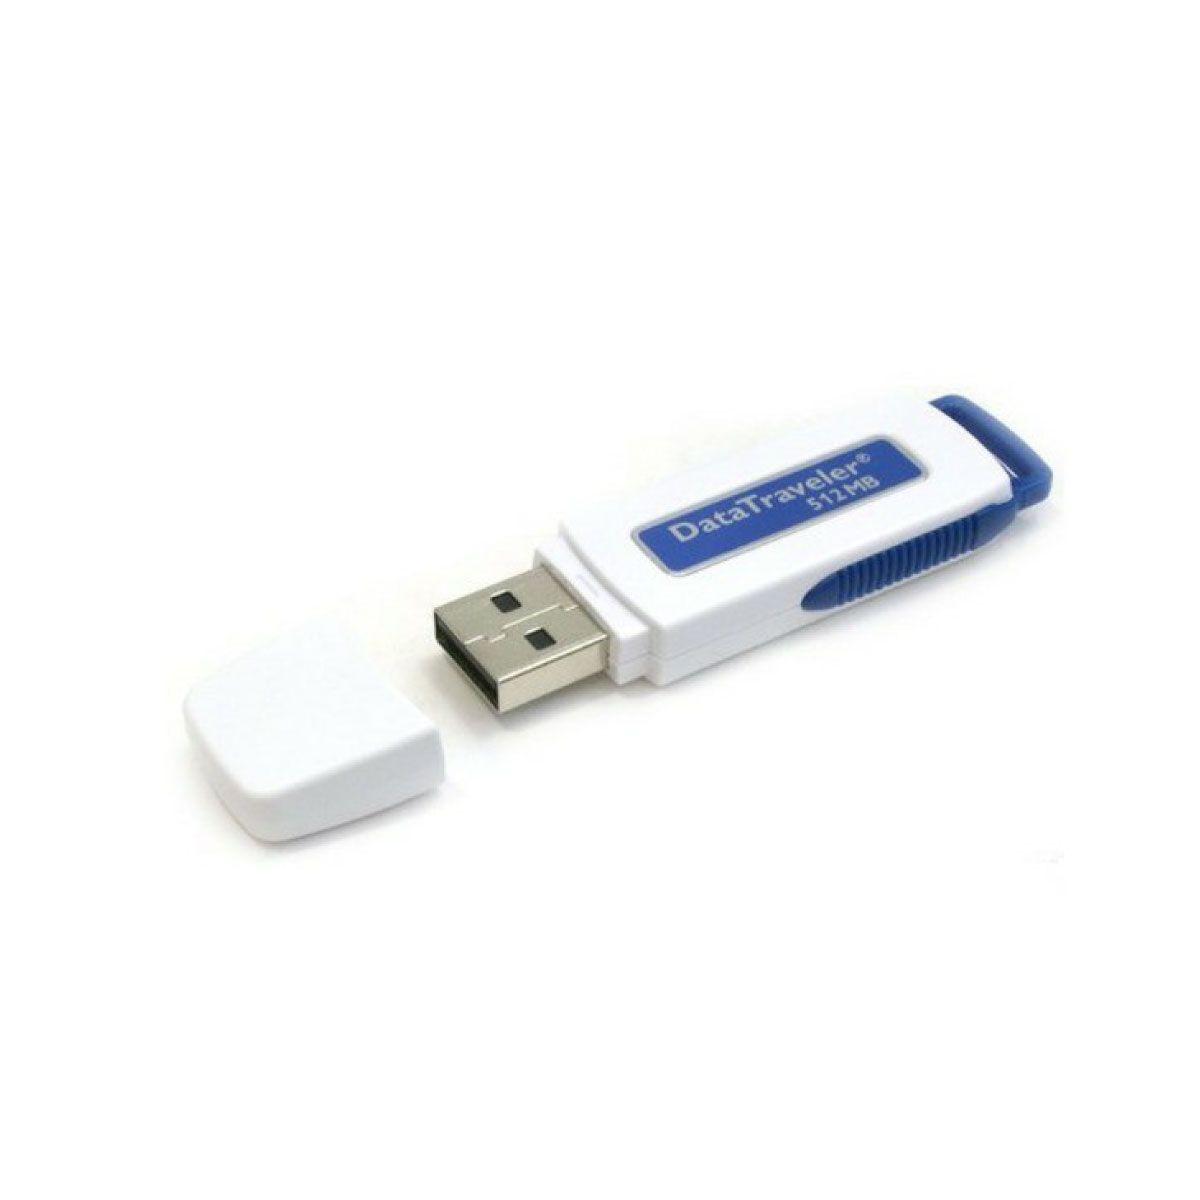 Kingston 512MB DataTraveler USB 2.0 Flash Drive